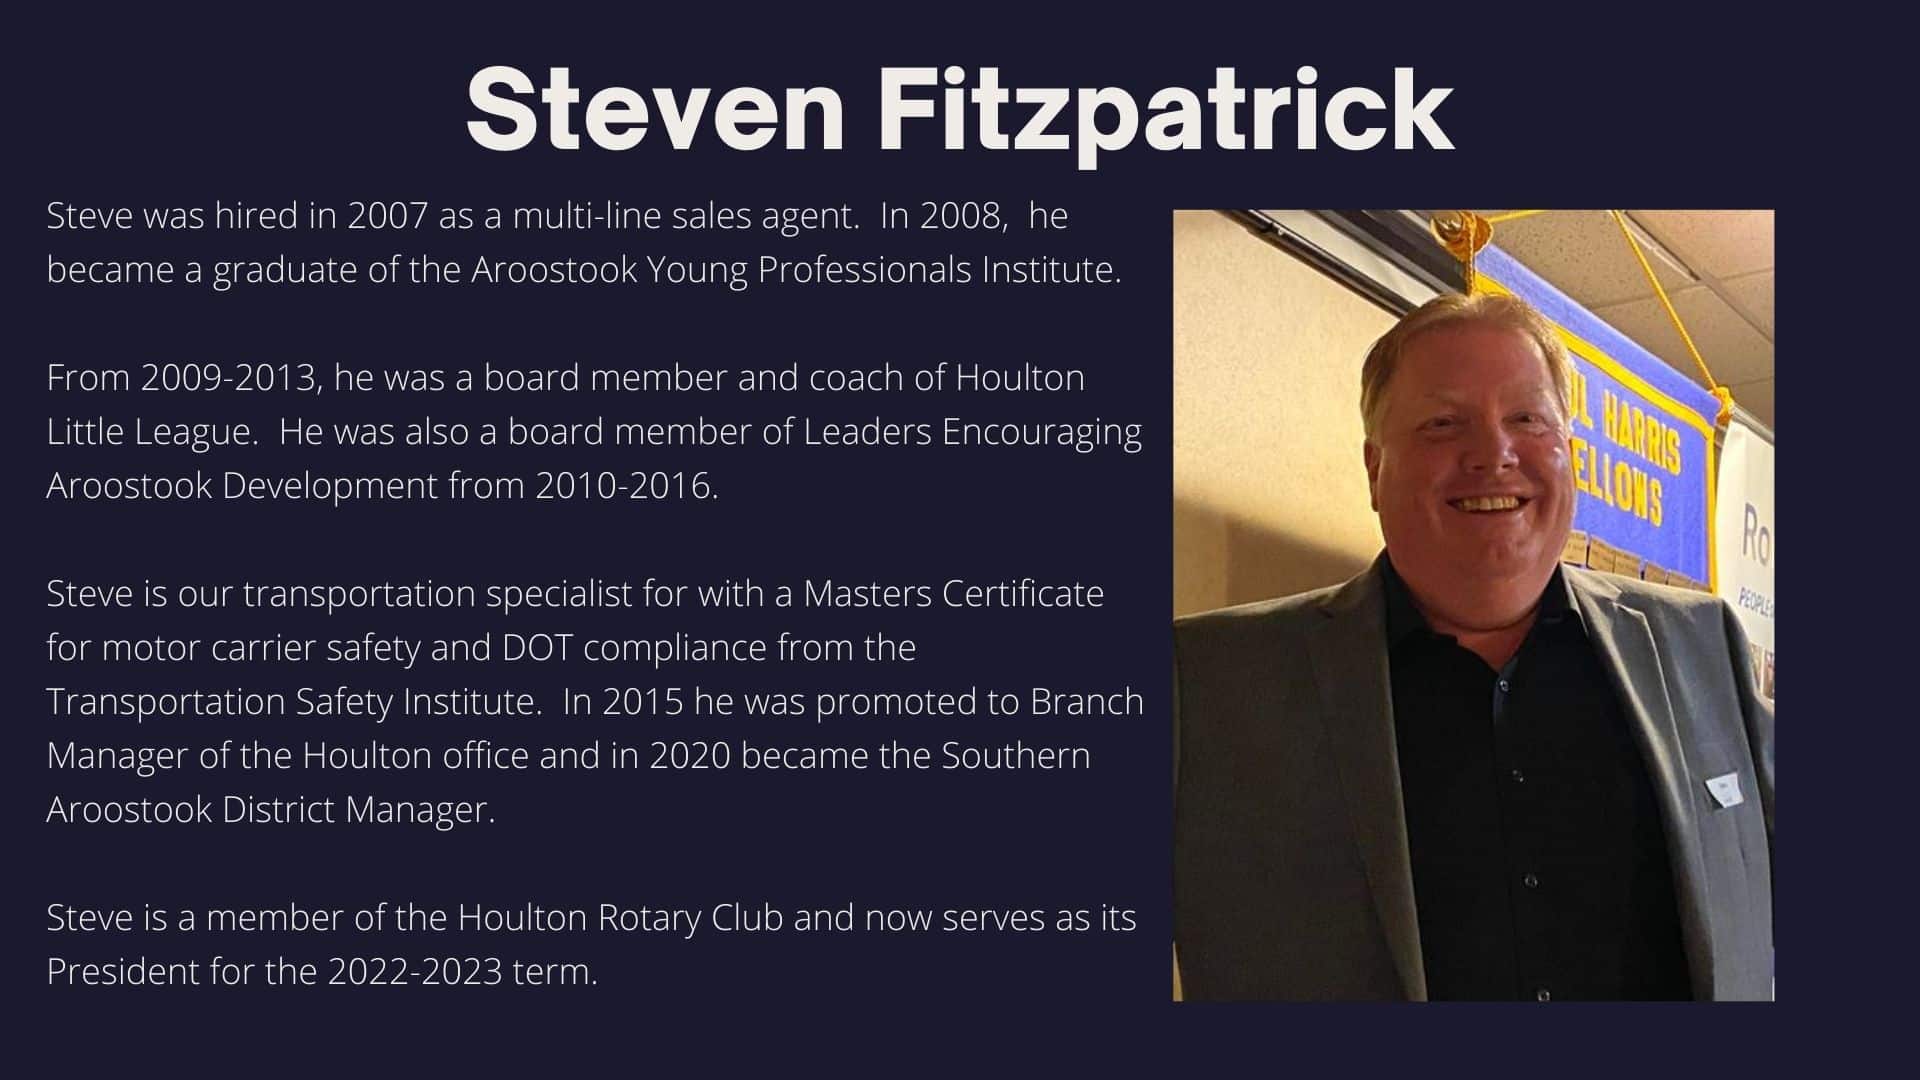 Steve Fitzpatrick 15 years